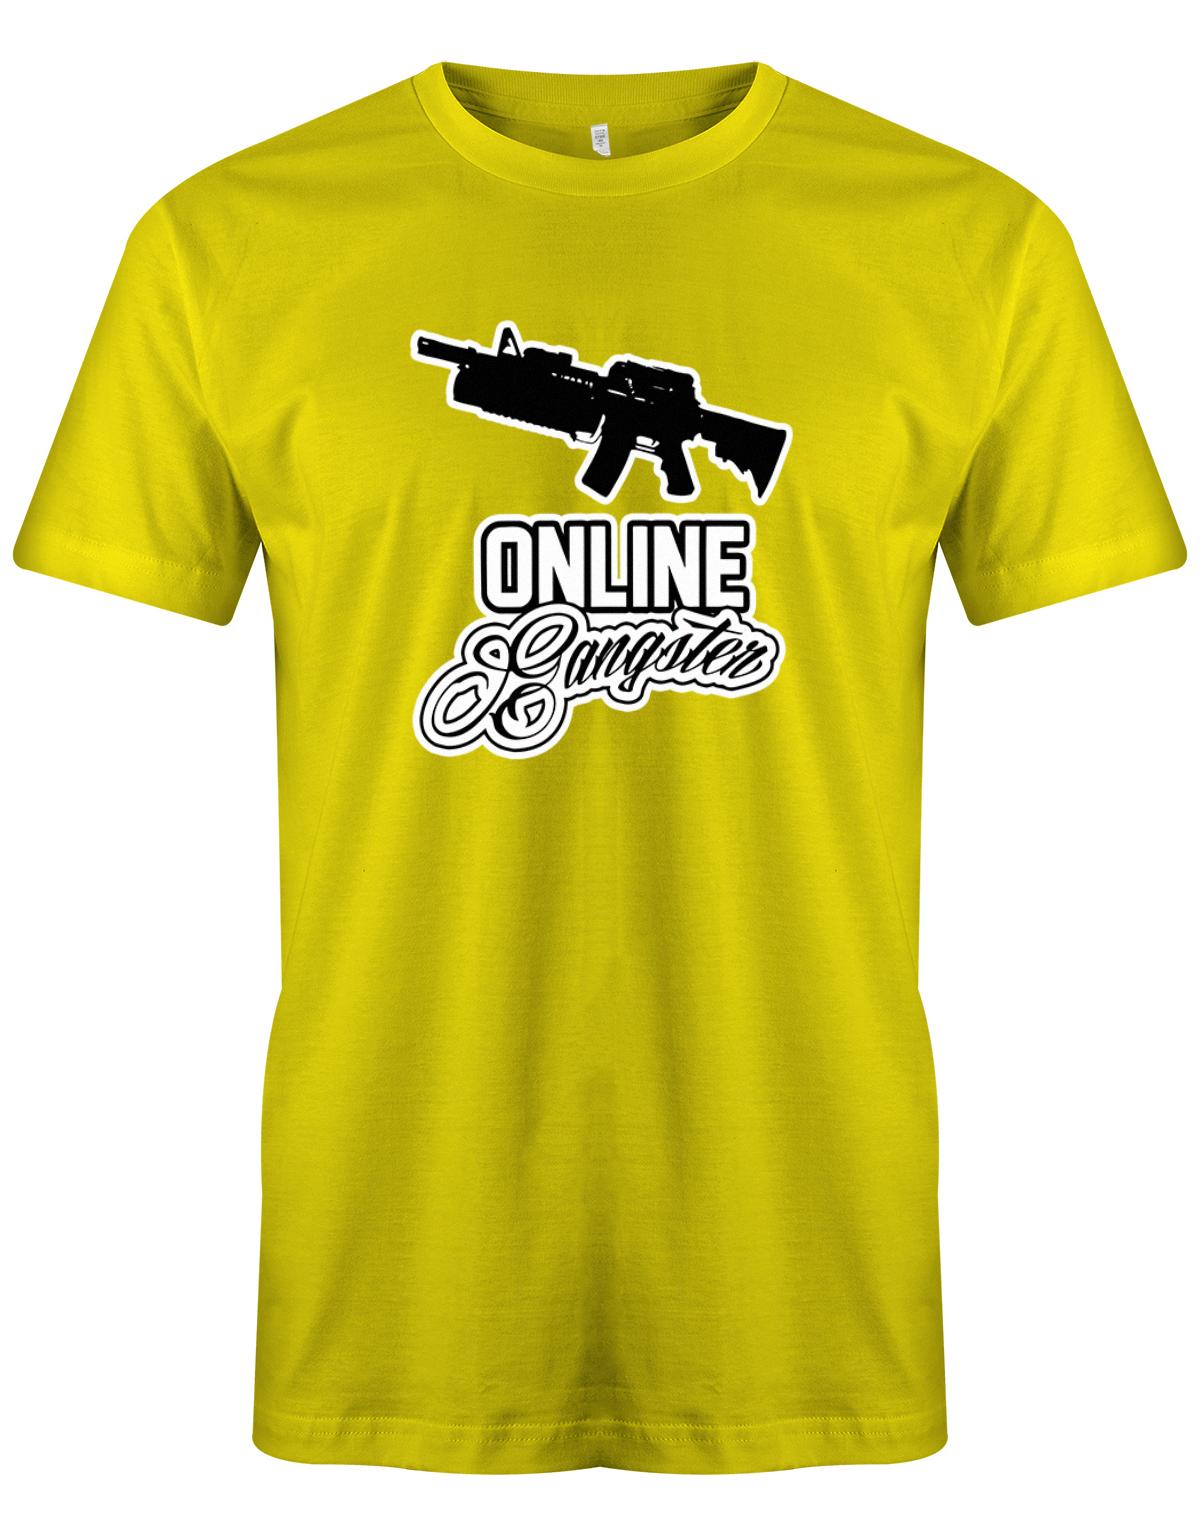 Online-Gangster-Herren-Shirt-Gelb